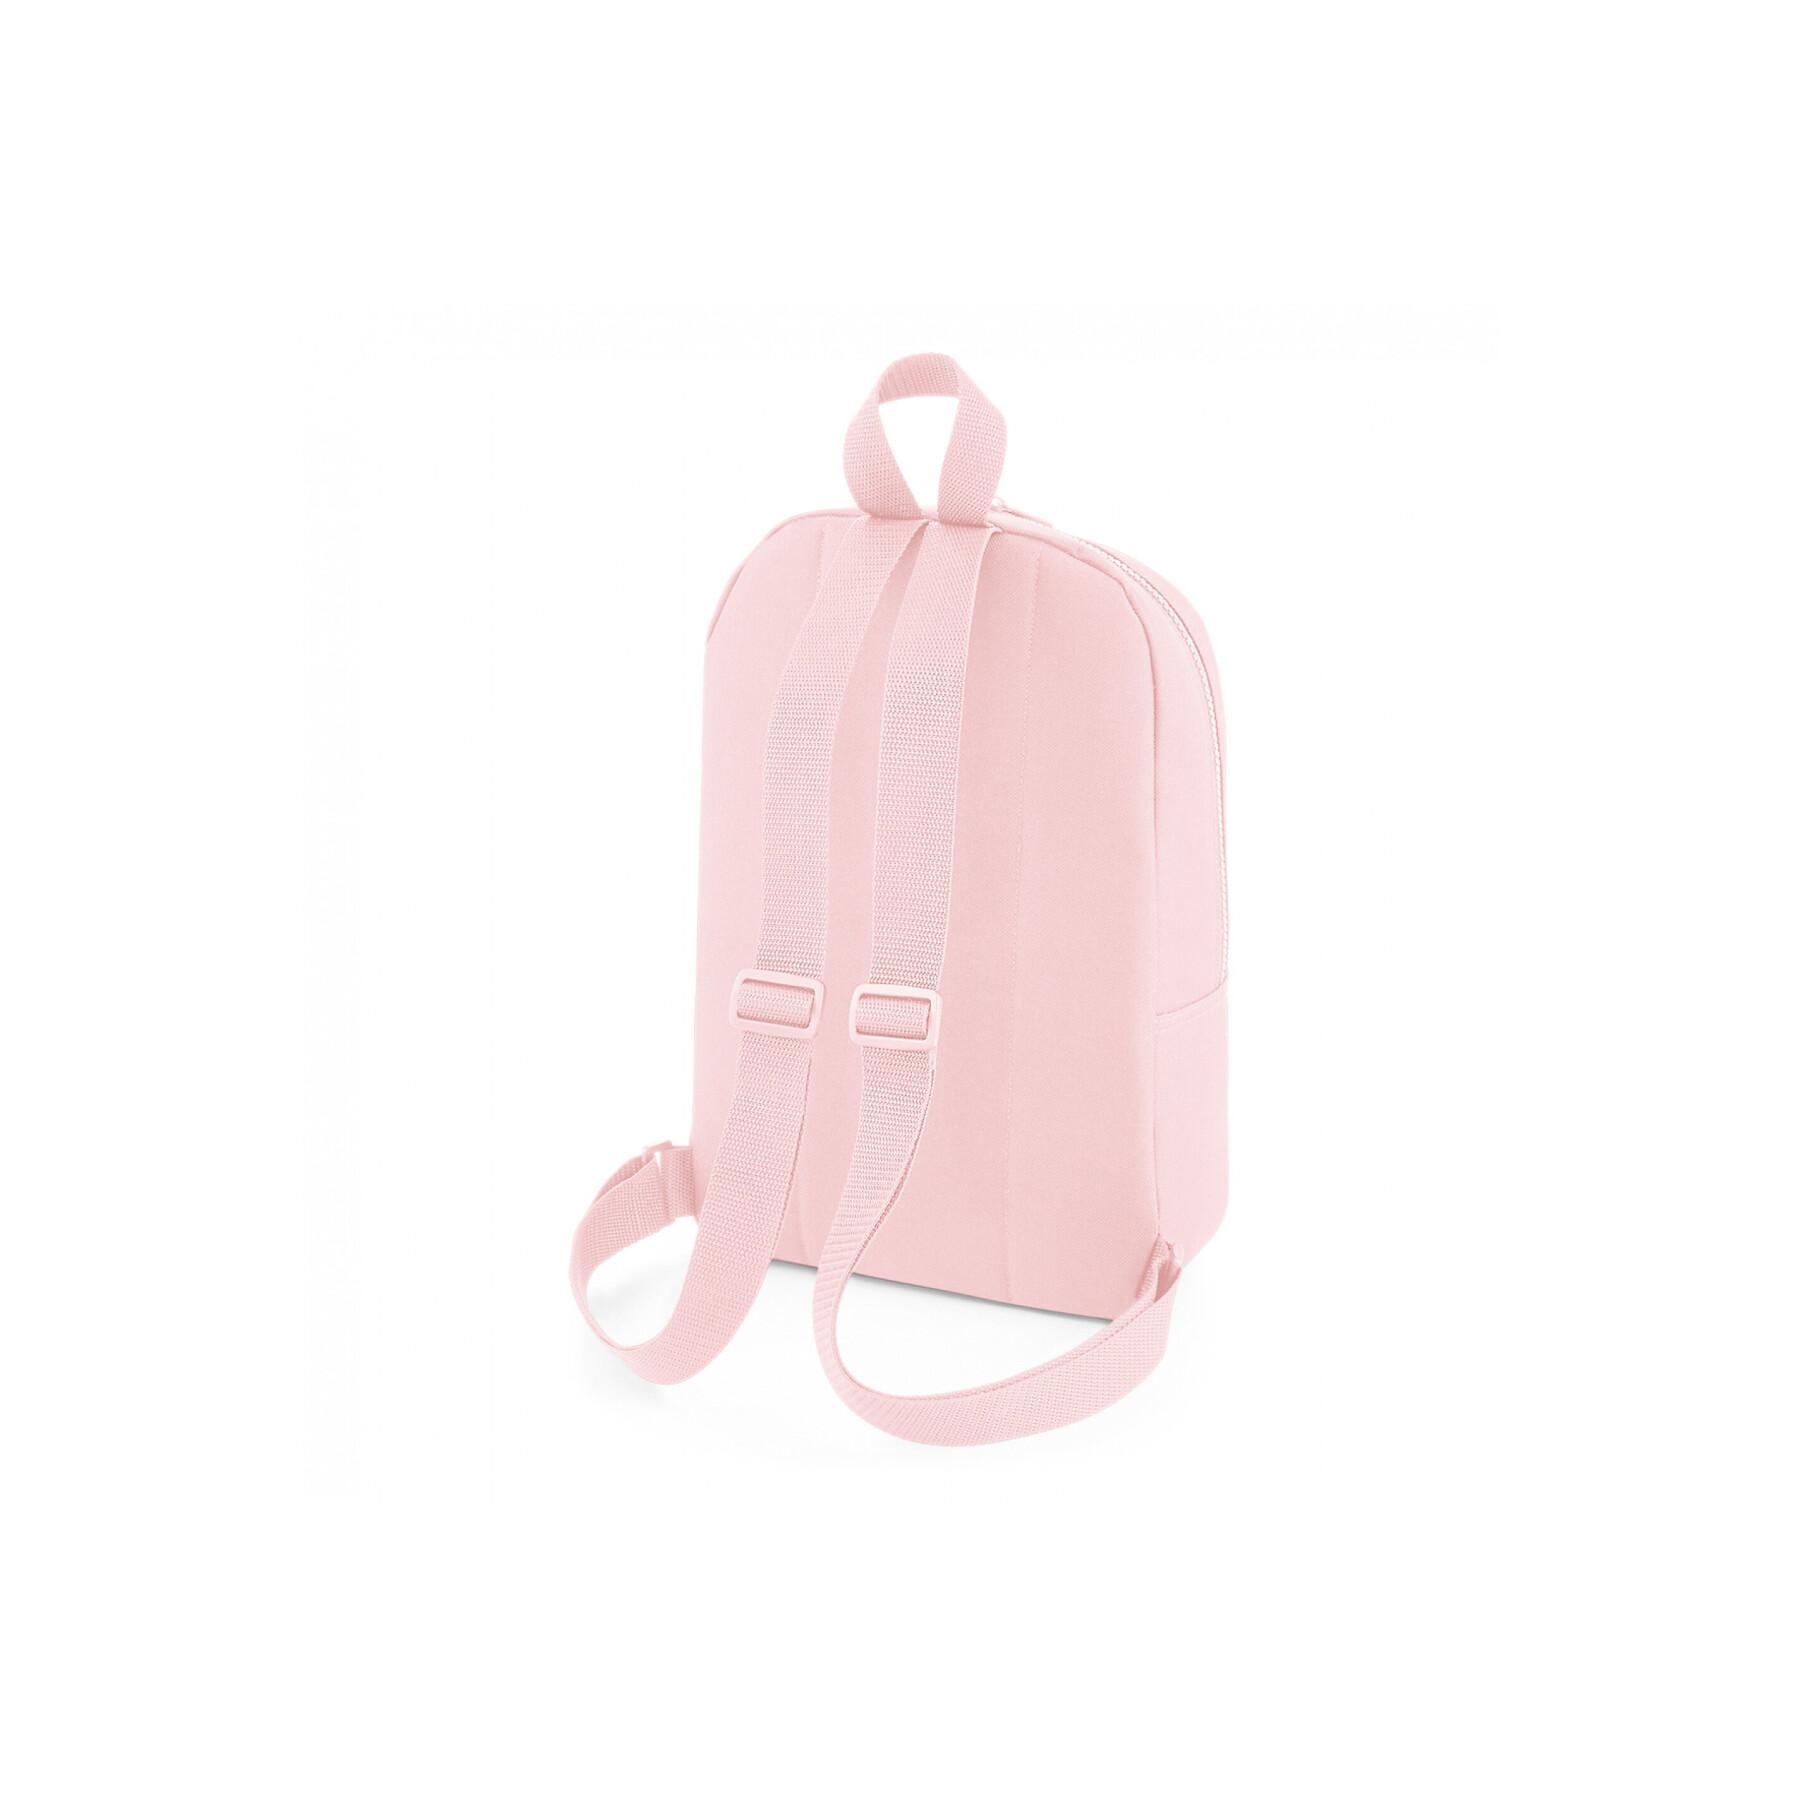 Women's backpack Bag Base Essential Fashion